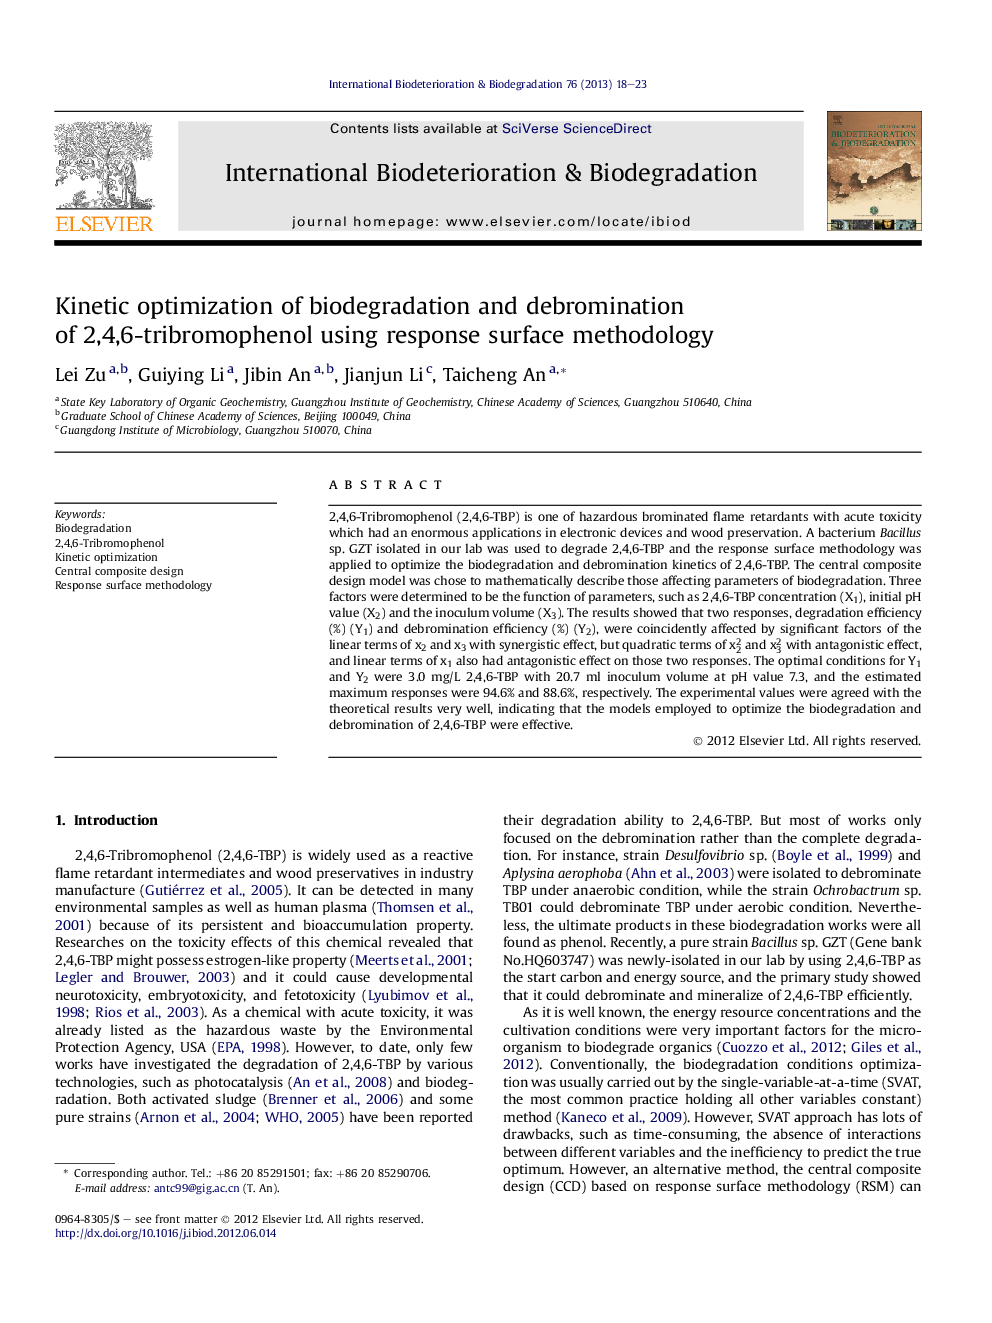 Kinetic optimization of biodegradation and debromination of 2,4,6-tribromophenol using response surface methodology